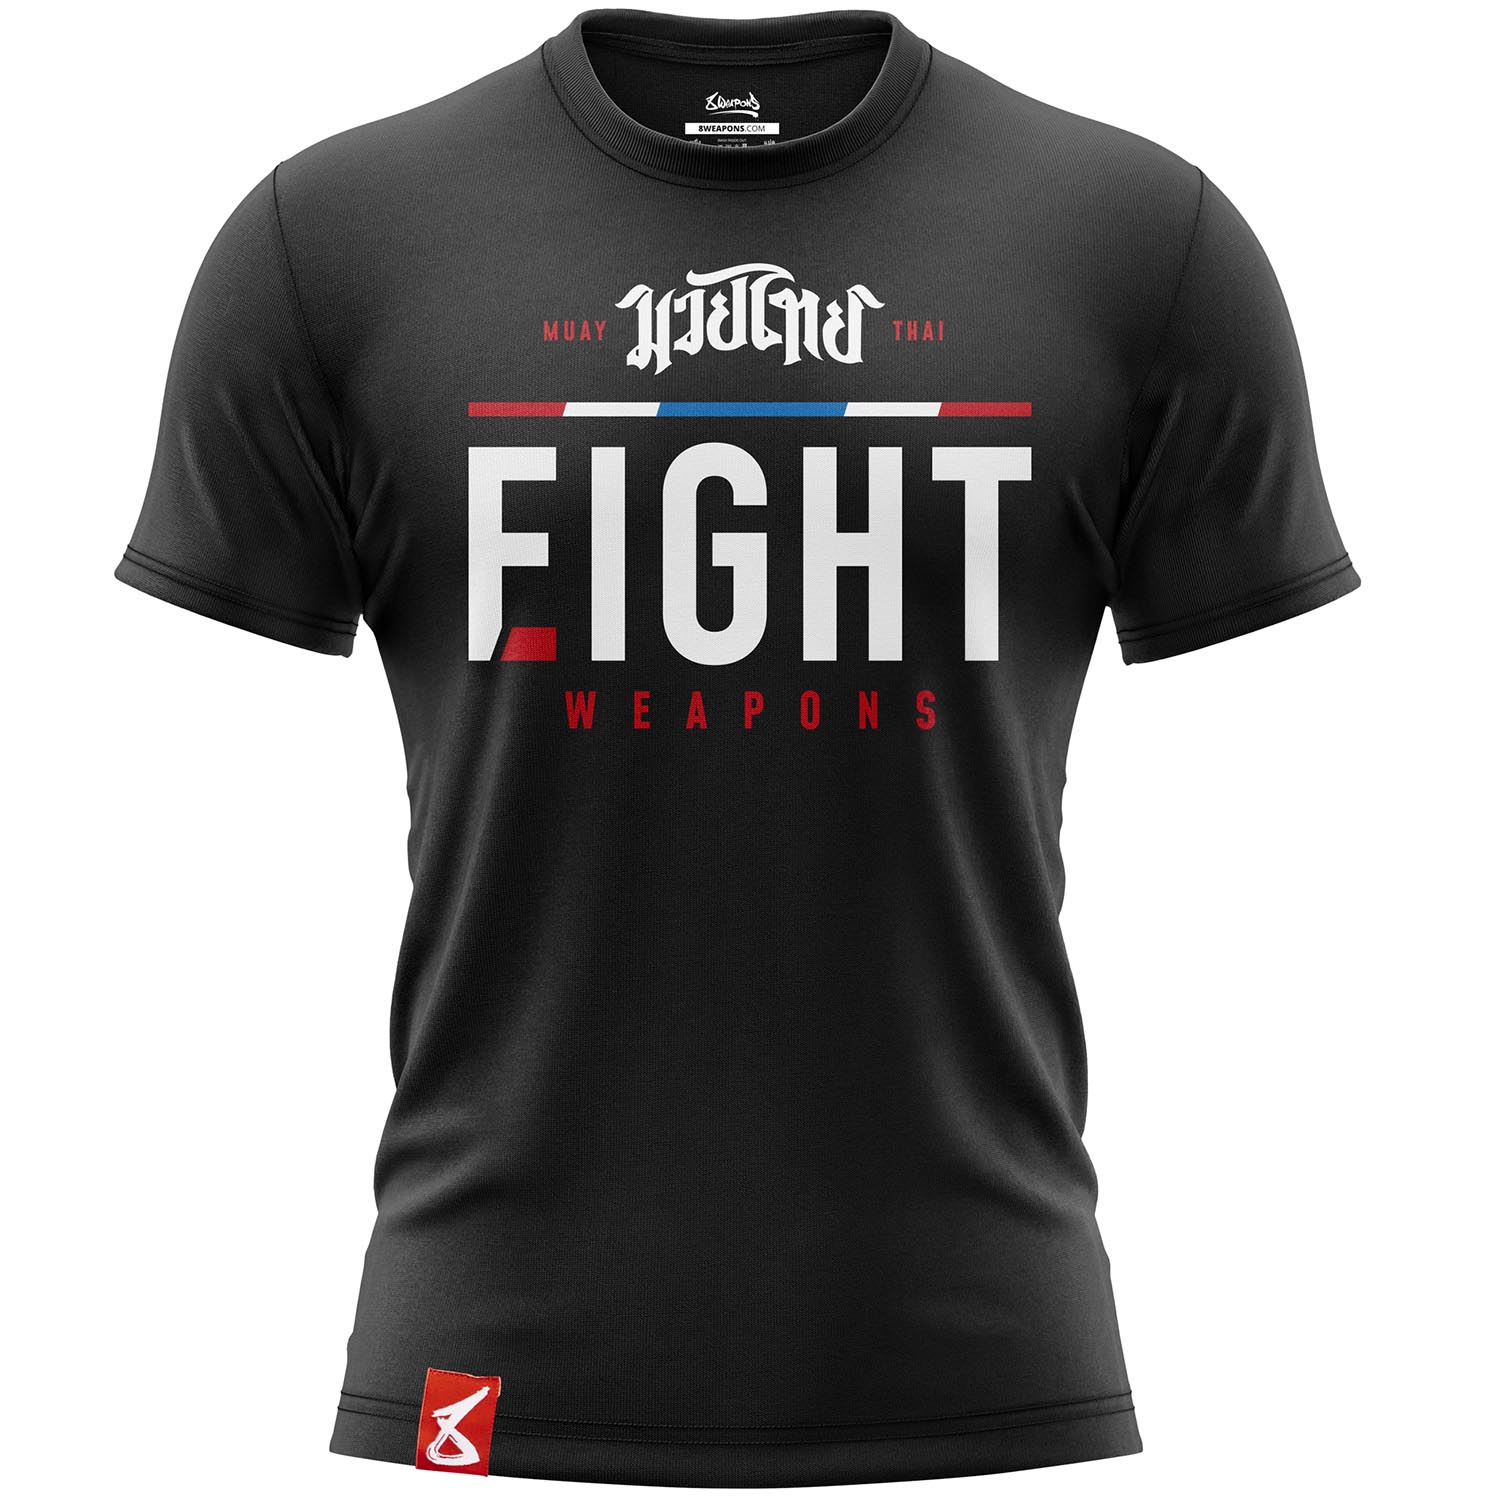 8 WEAPONS Muay Thai T-Shirt, The Fight, schwarz